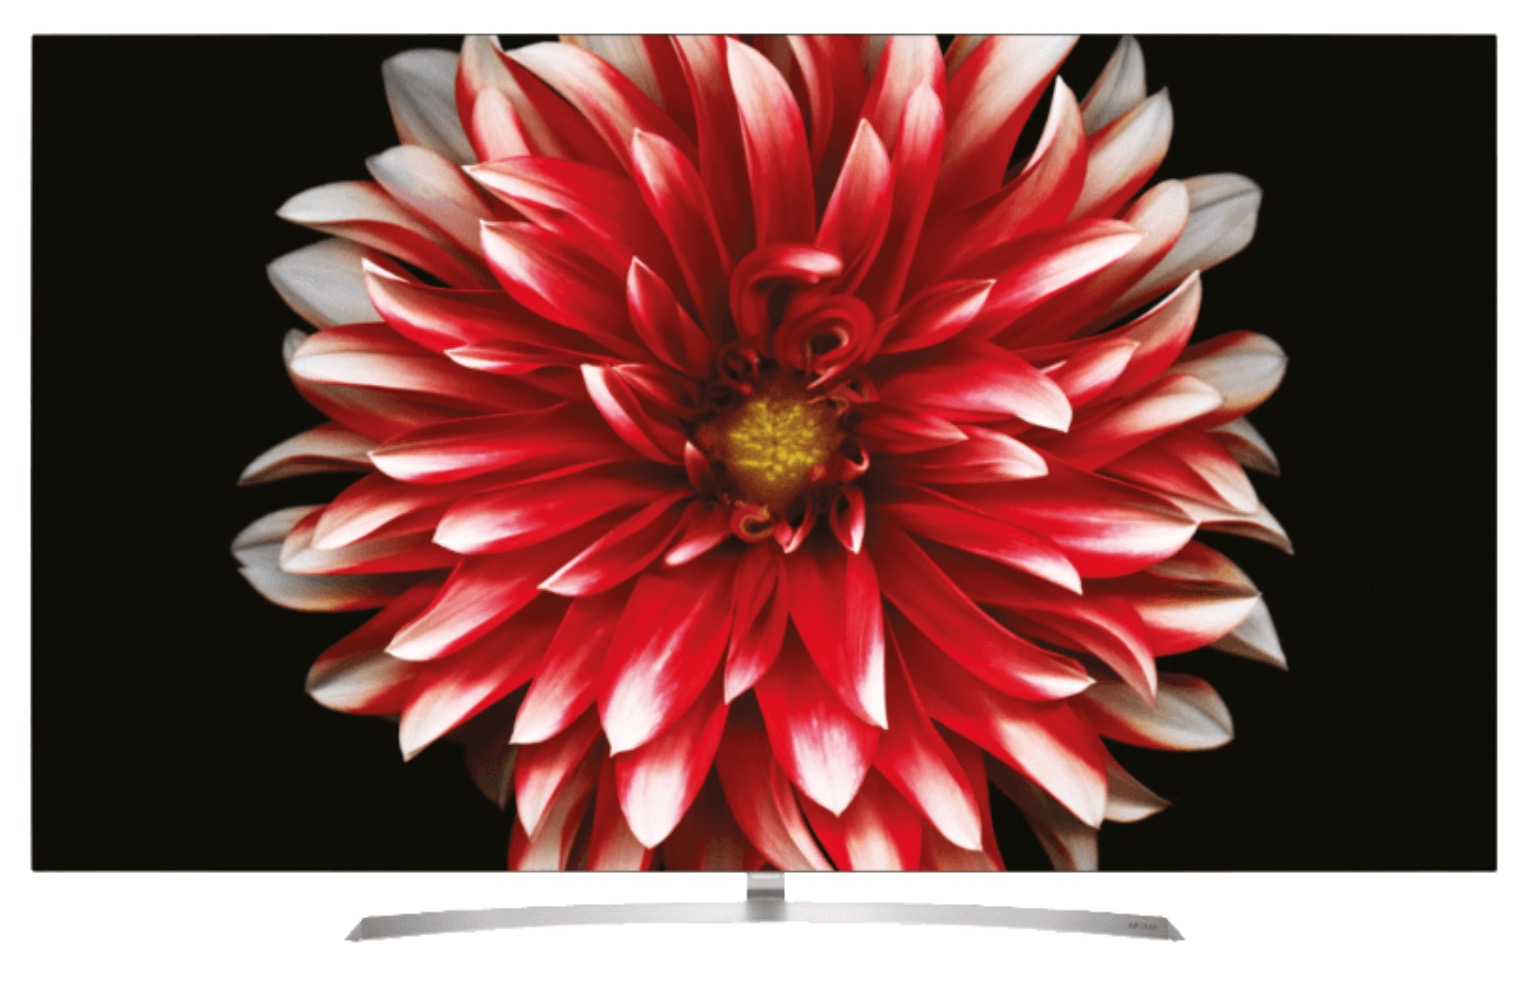 LG 65B7D 65 Zoll OLED Smart TV für nur 1.799,- Euro inkl. Versand